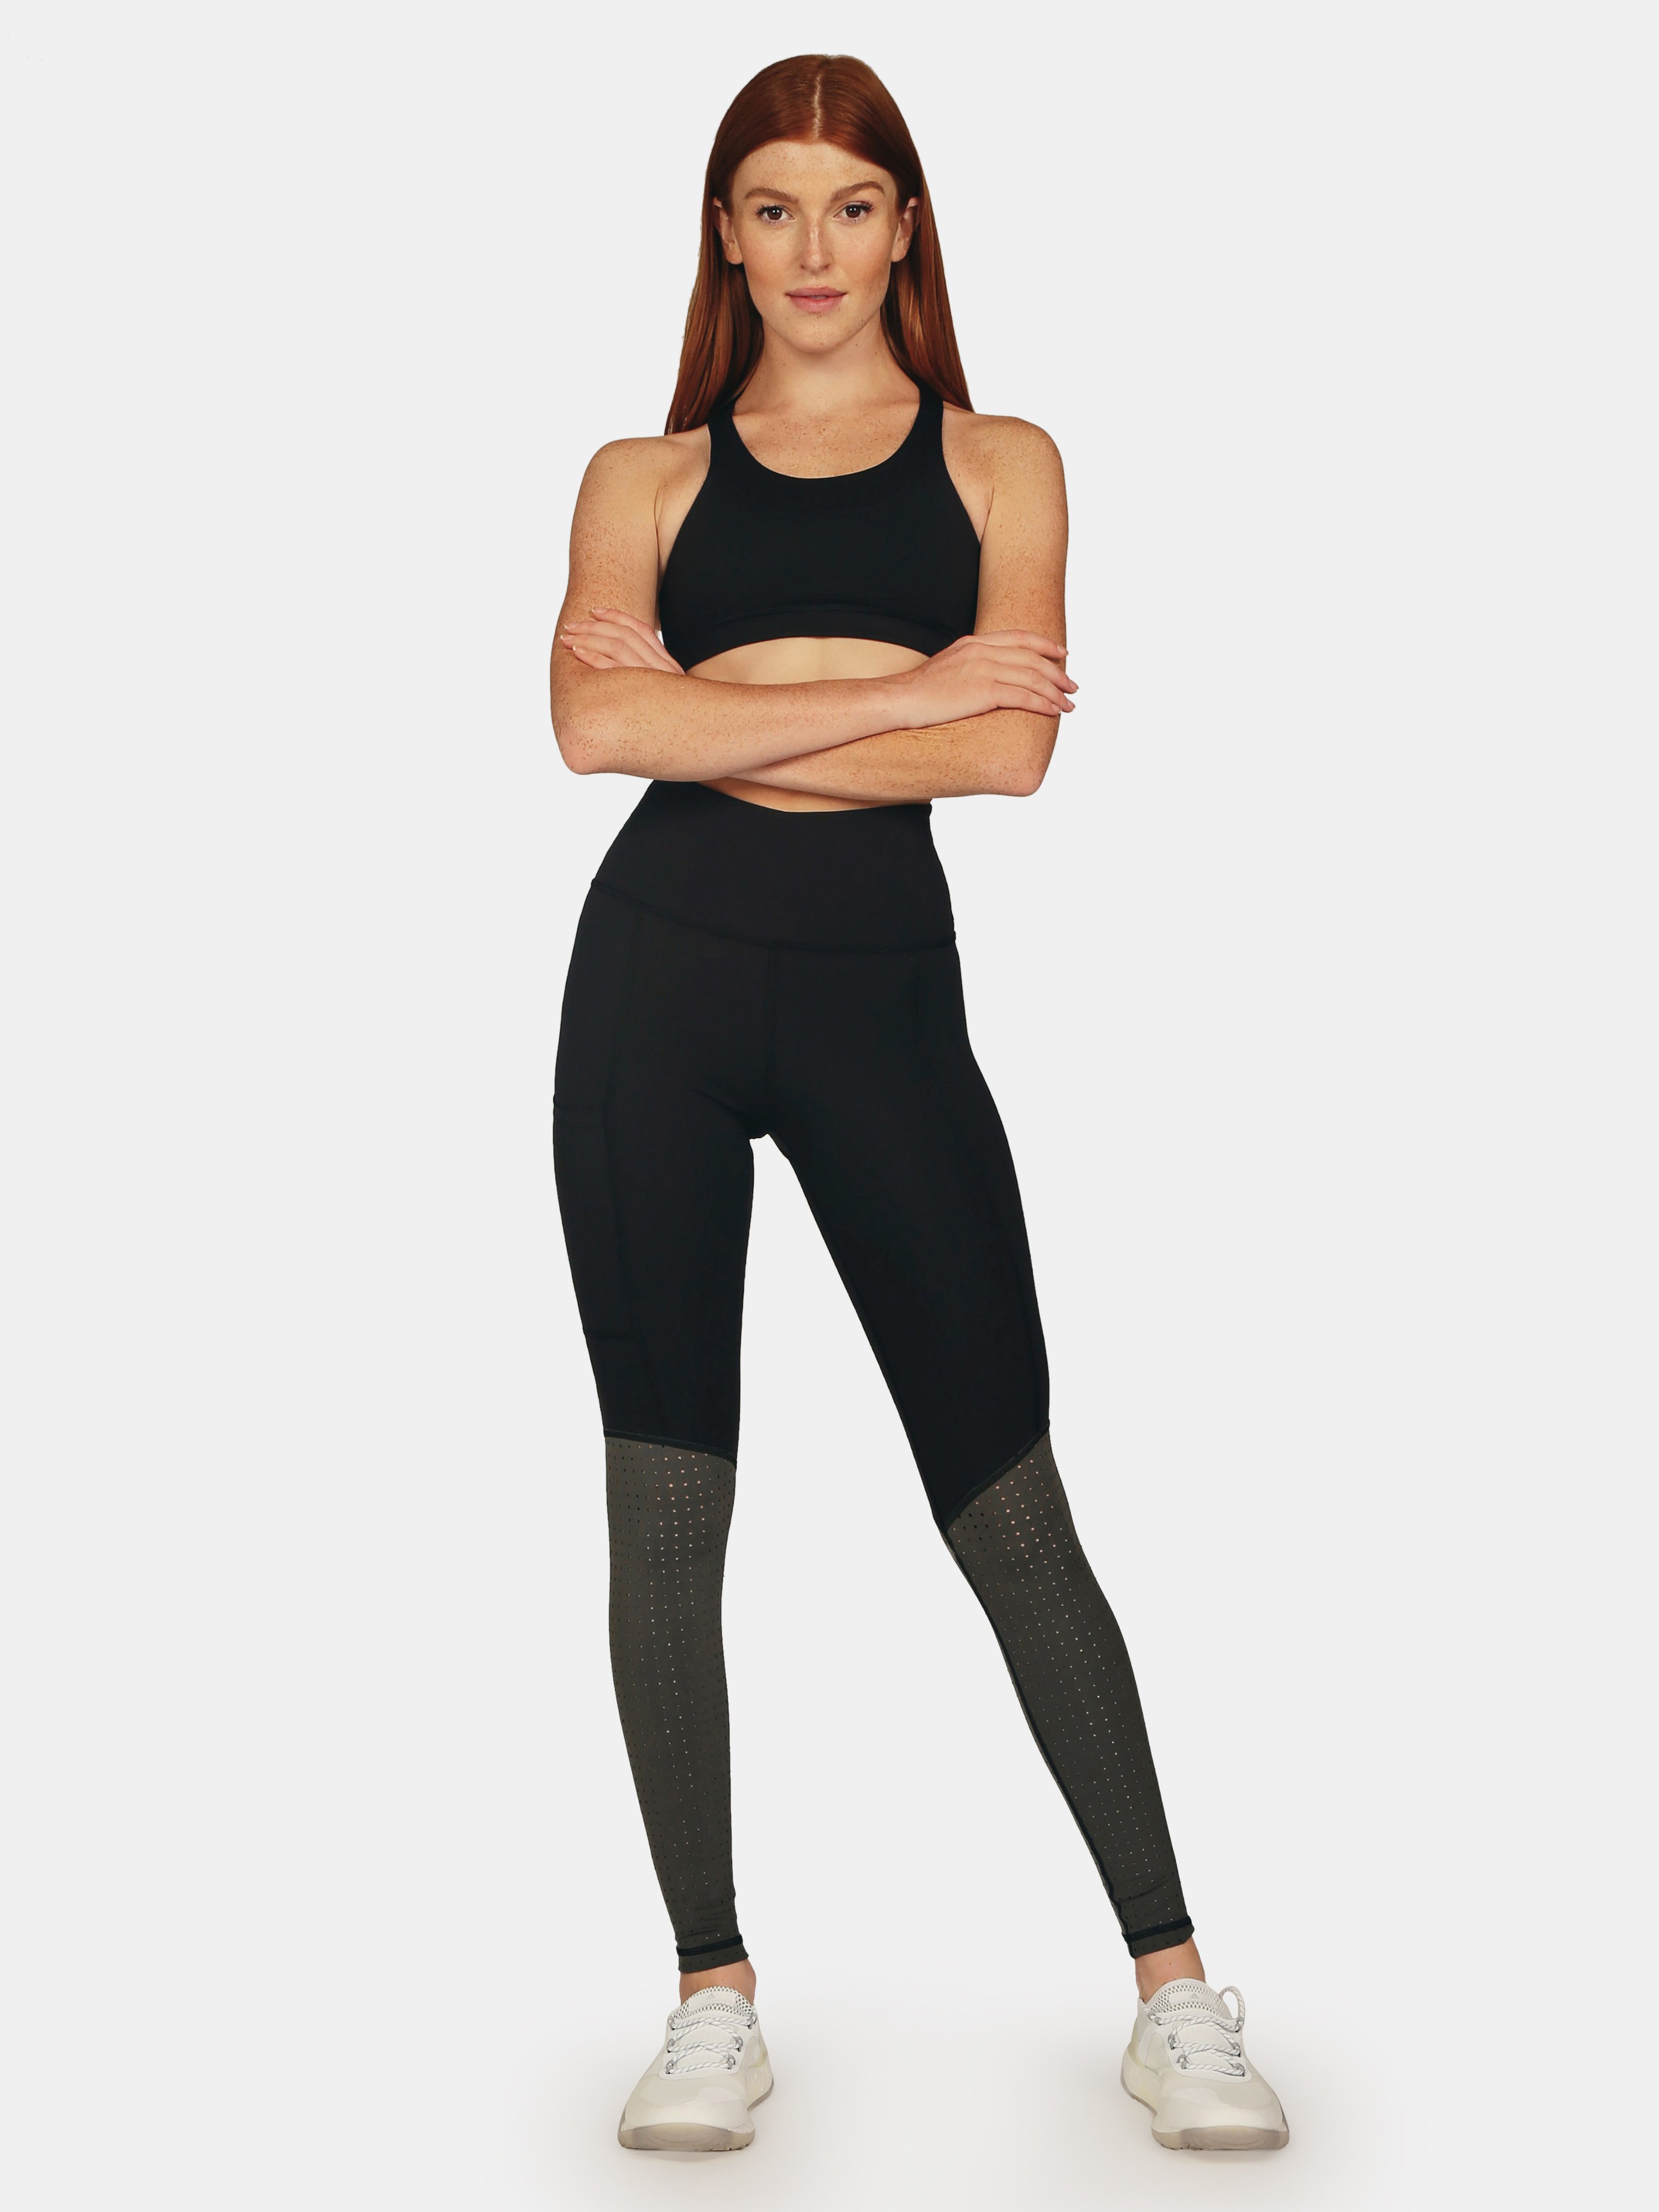 Alana Athletica The Dash Side Pocket Legging In Black/gray Laser Cut